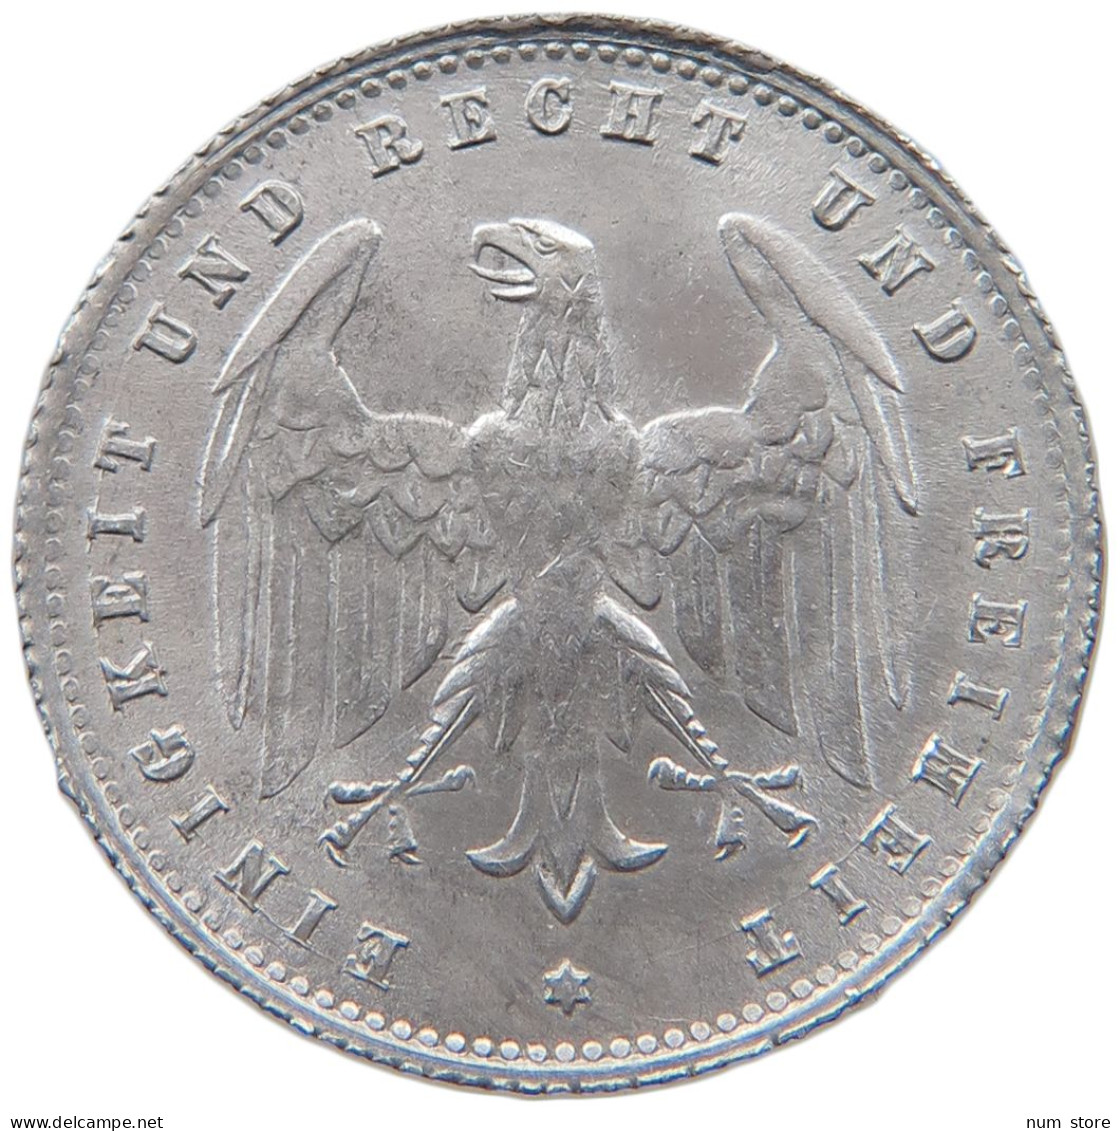 WEIMARER REPUBLIK 200 MARK 1923 G  #MA 098771 - 200 & 500 Mark